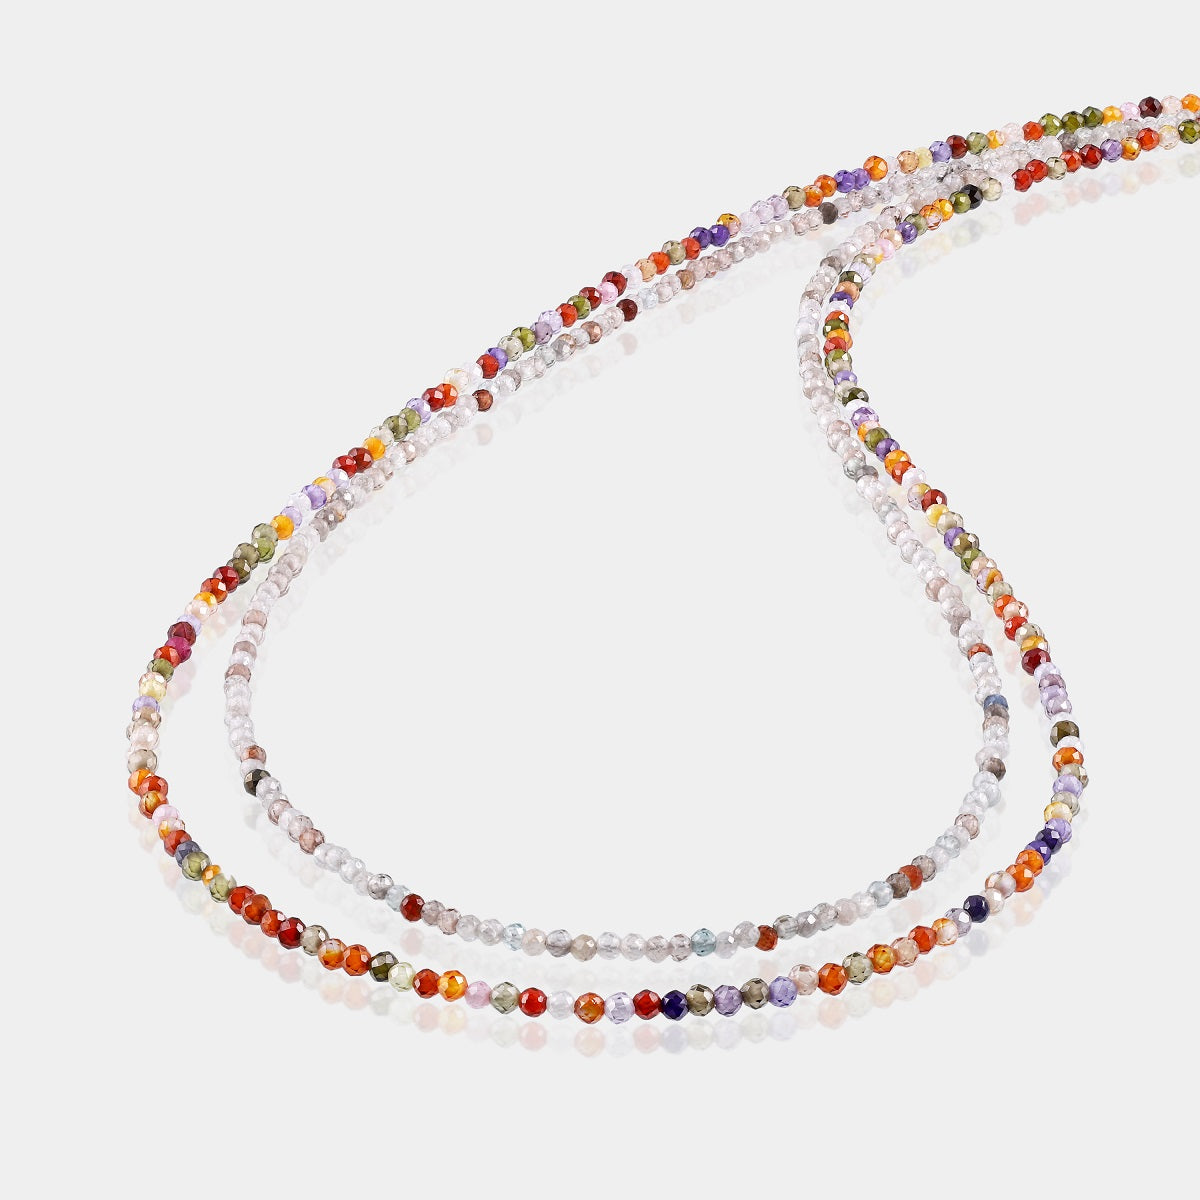 Fashionable and Elegant Zircon Beads Necklace